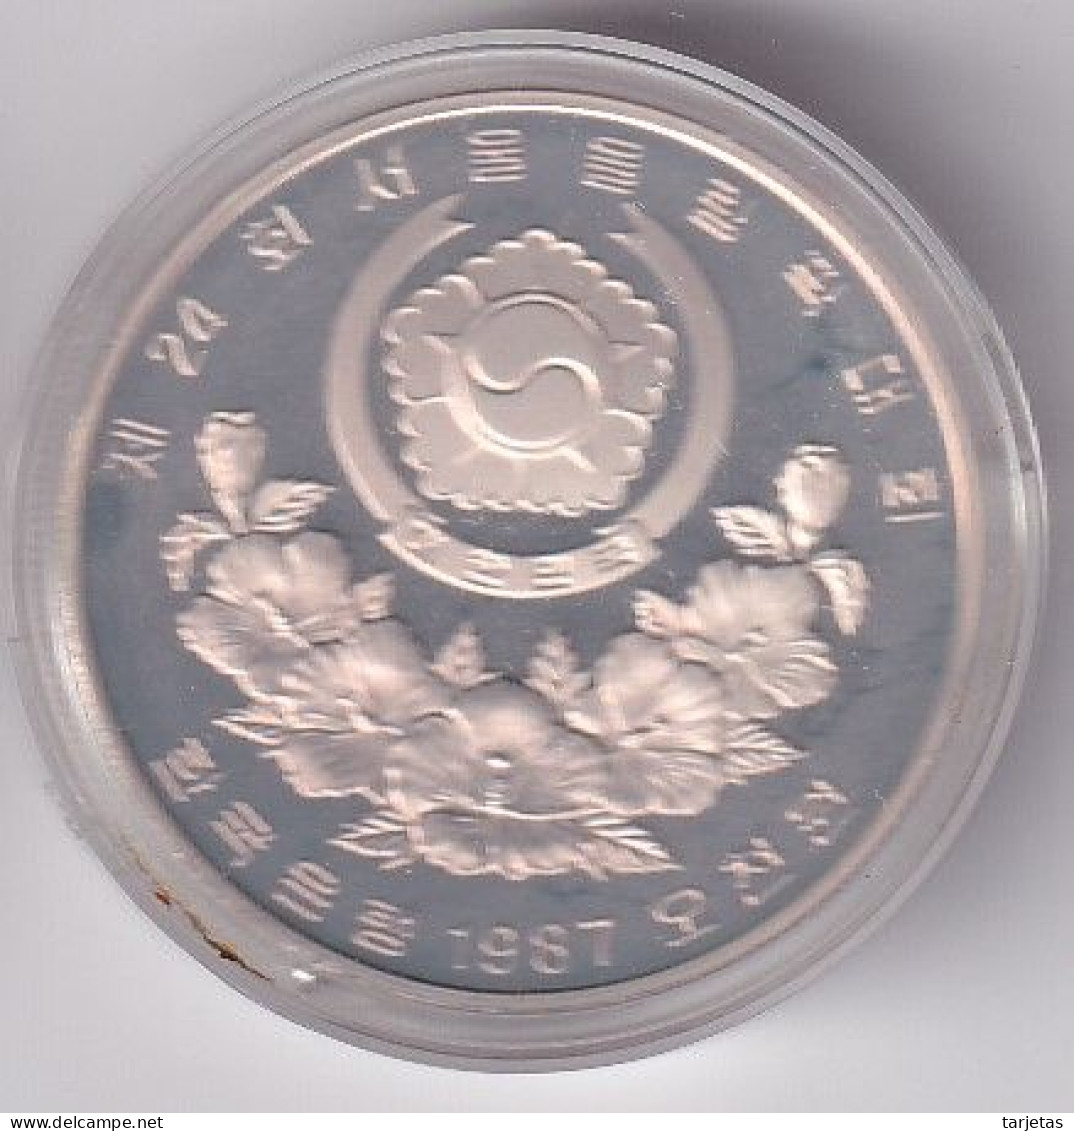 MONEDA DE PLATA DE COREA DEL SUR DE 5000 WON DEL AÑO 1987  (COIN) SEOUL 1988 - Korea, South